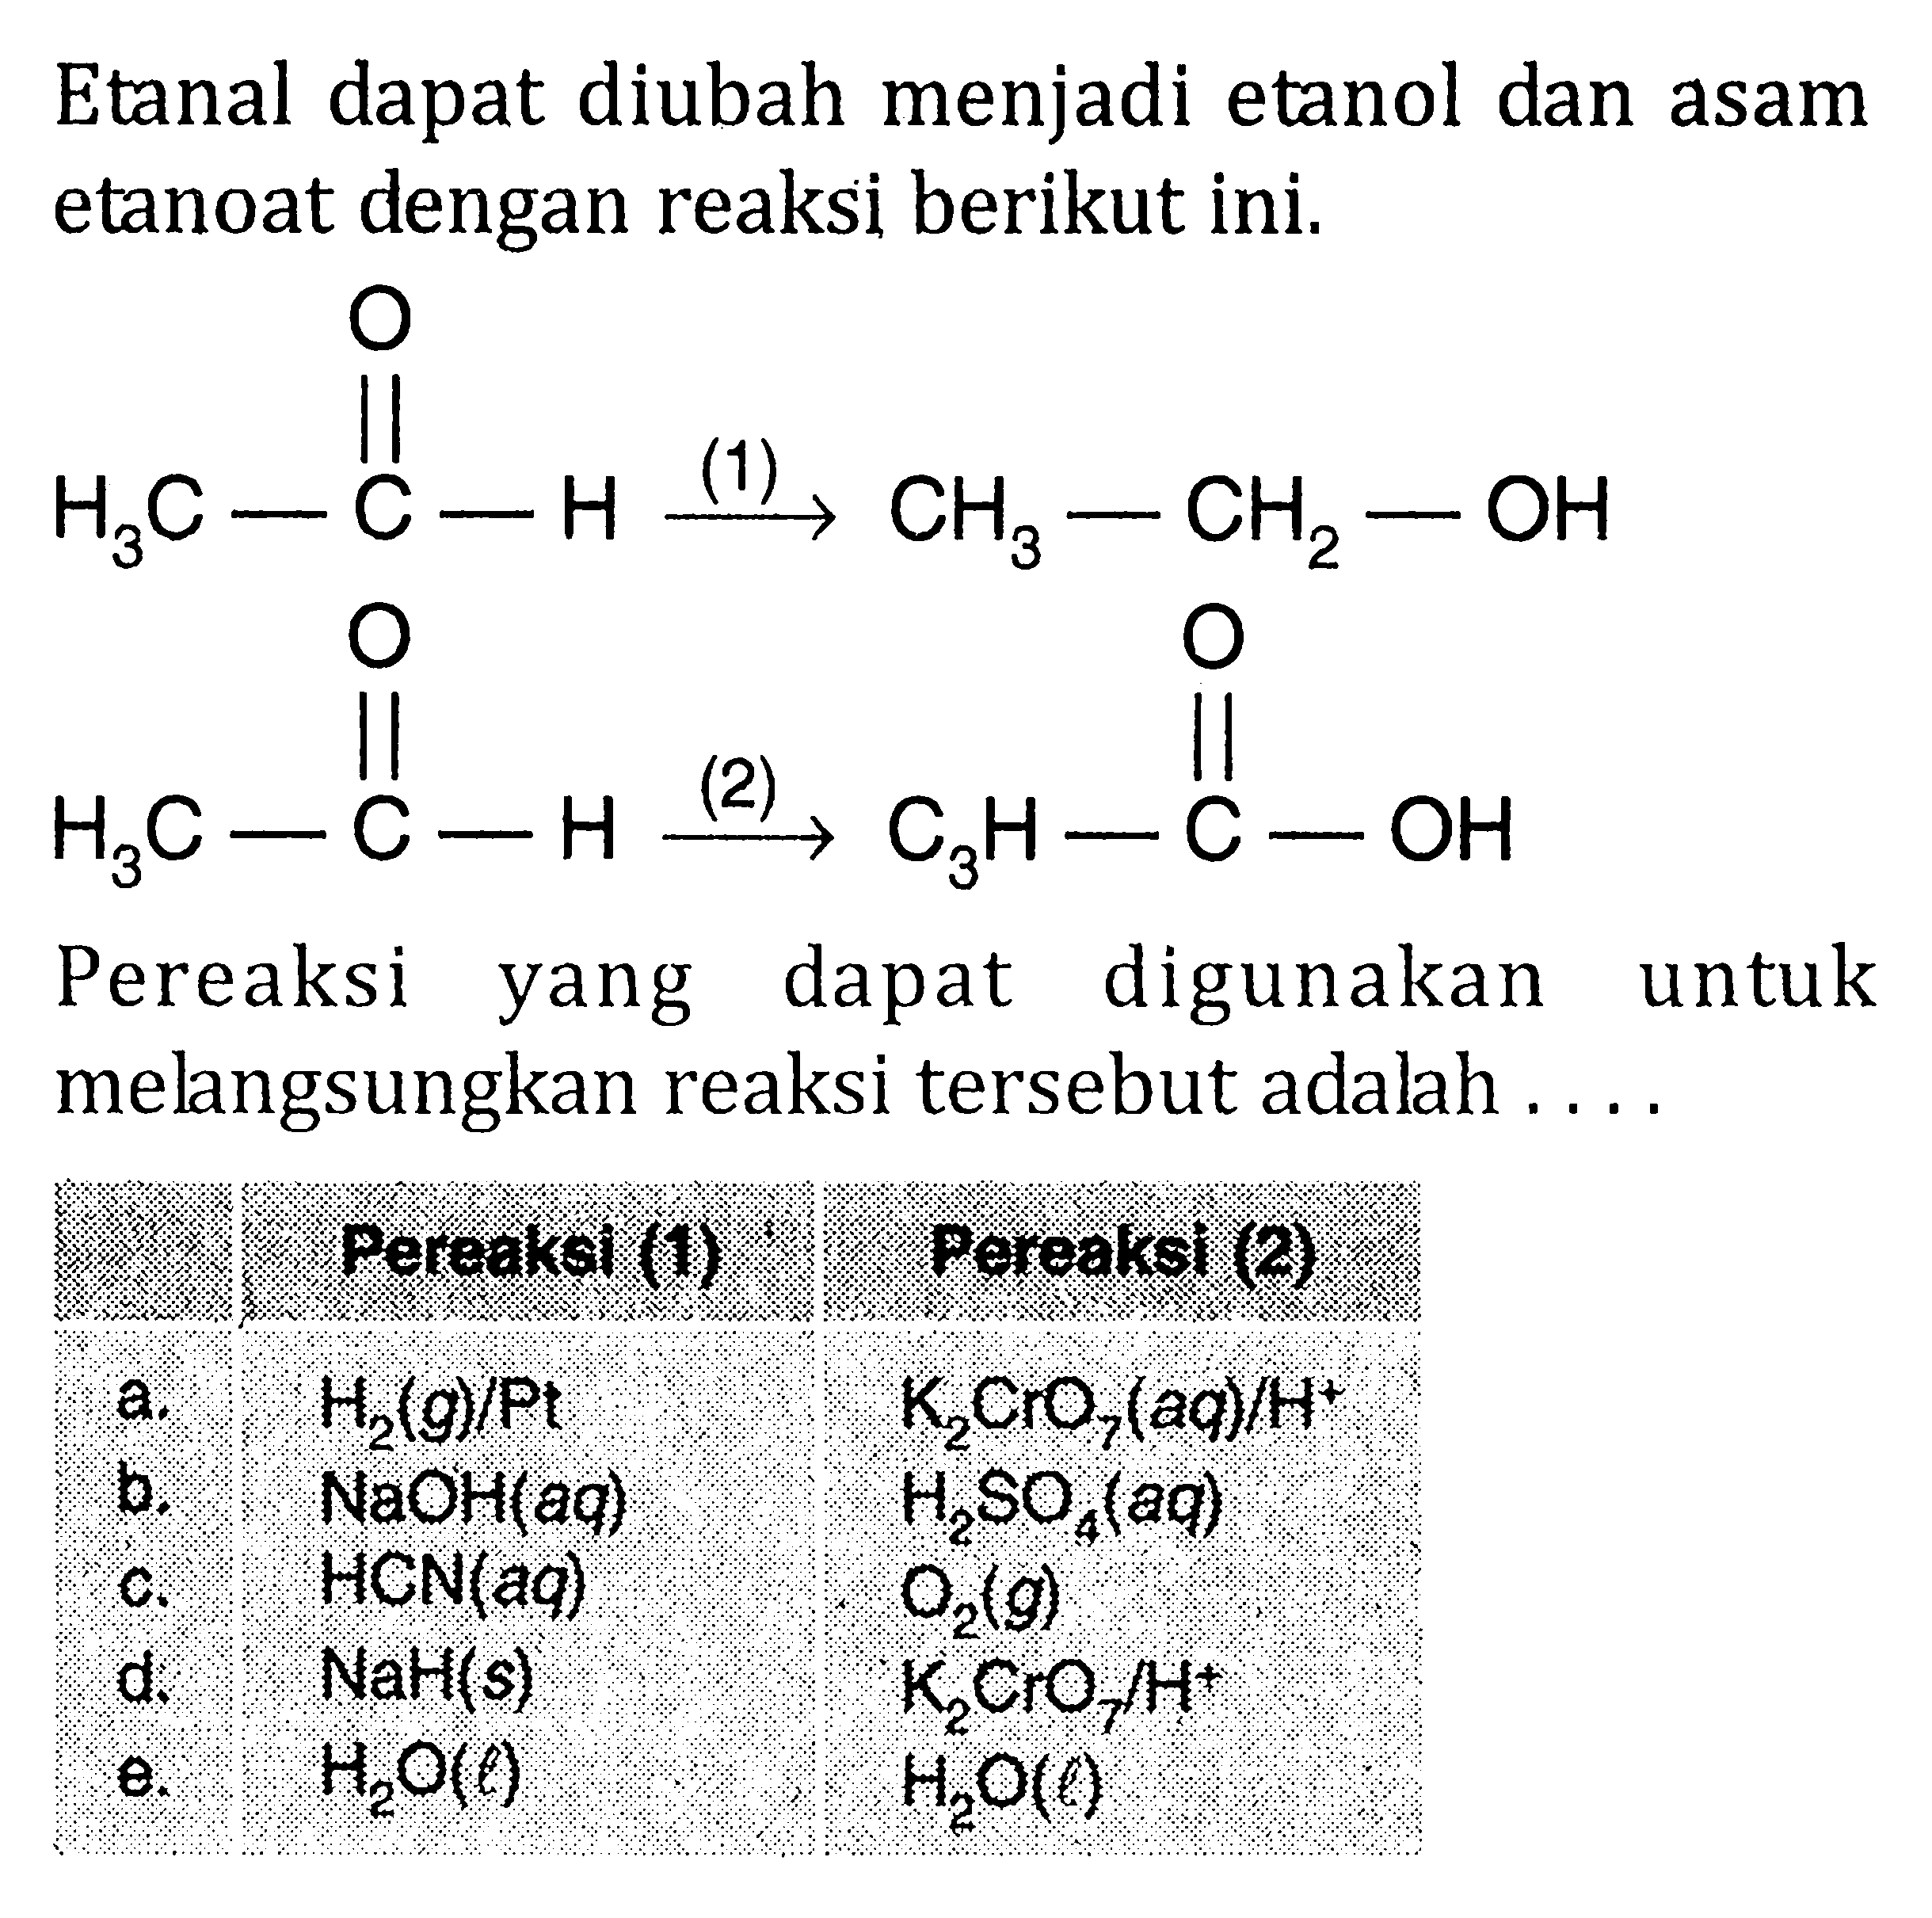 Etanal dapat diubah menjadi etanol dan asam etanoat dengan reaksi berikut ini. O H3C-C-H->CH3-CH2-OH O O H3C-C-H->C3H-C-OH Pereaksi yang dapat digunakan untuk melangsungkan reaksi tersebut adalah.... 